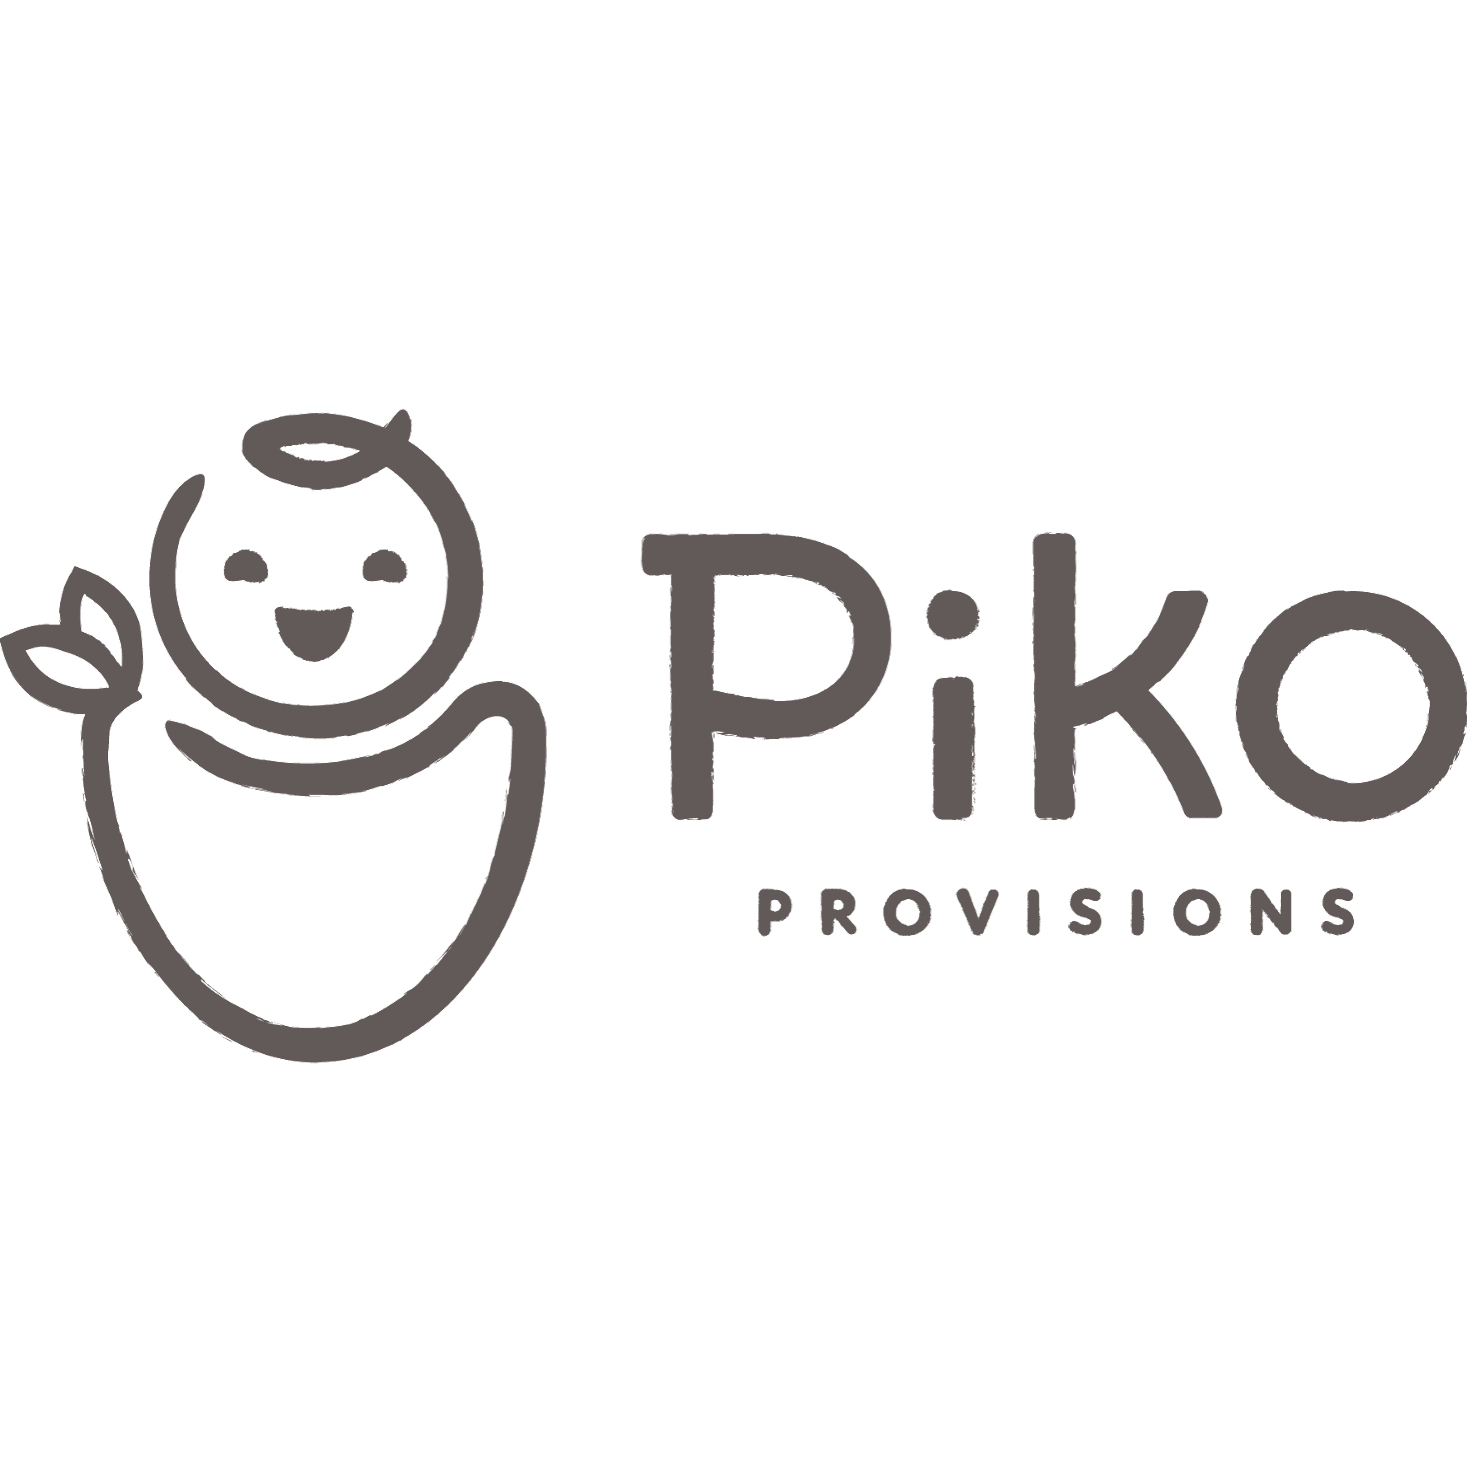 Piko Provisions